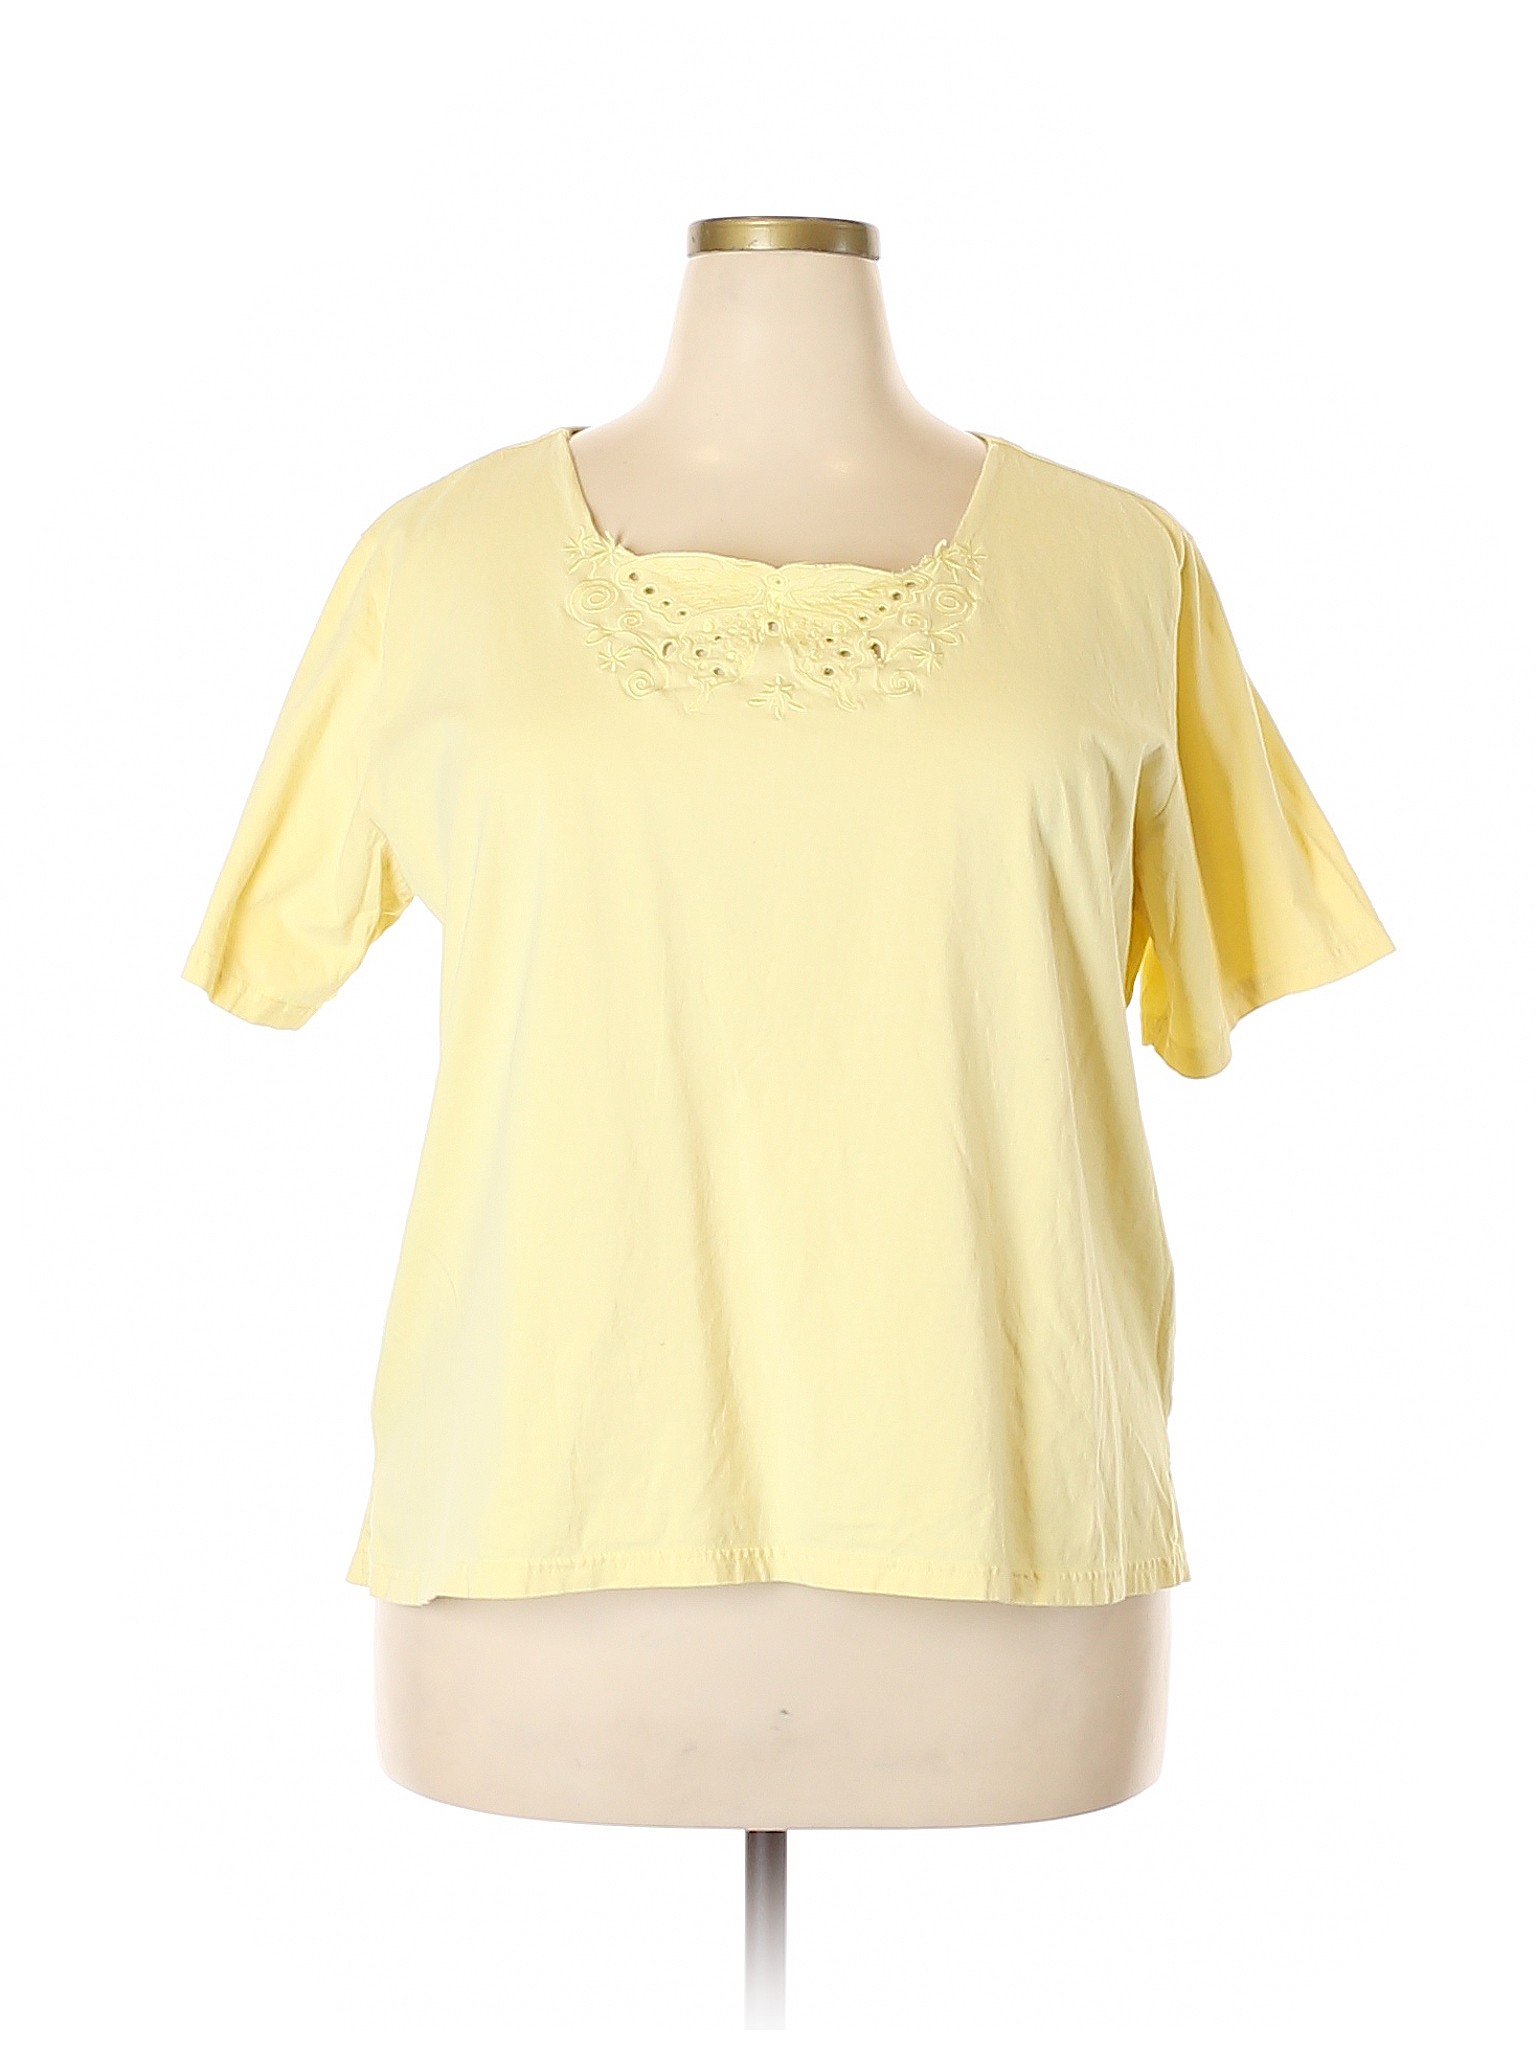 Anthony Richards 100% Cotton Solid Yellow Short Sleeve T-Shirt Size 2X ...